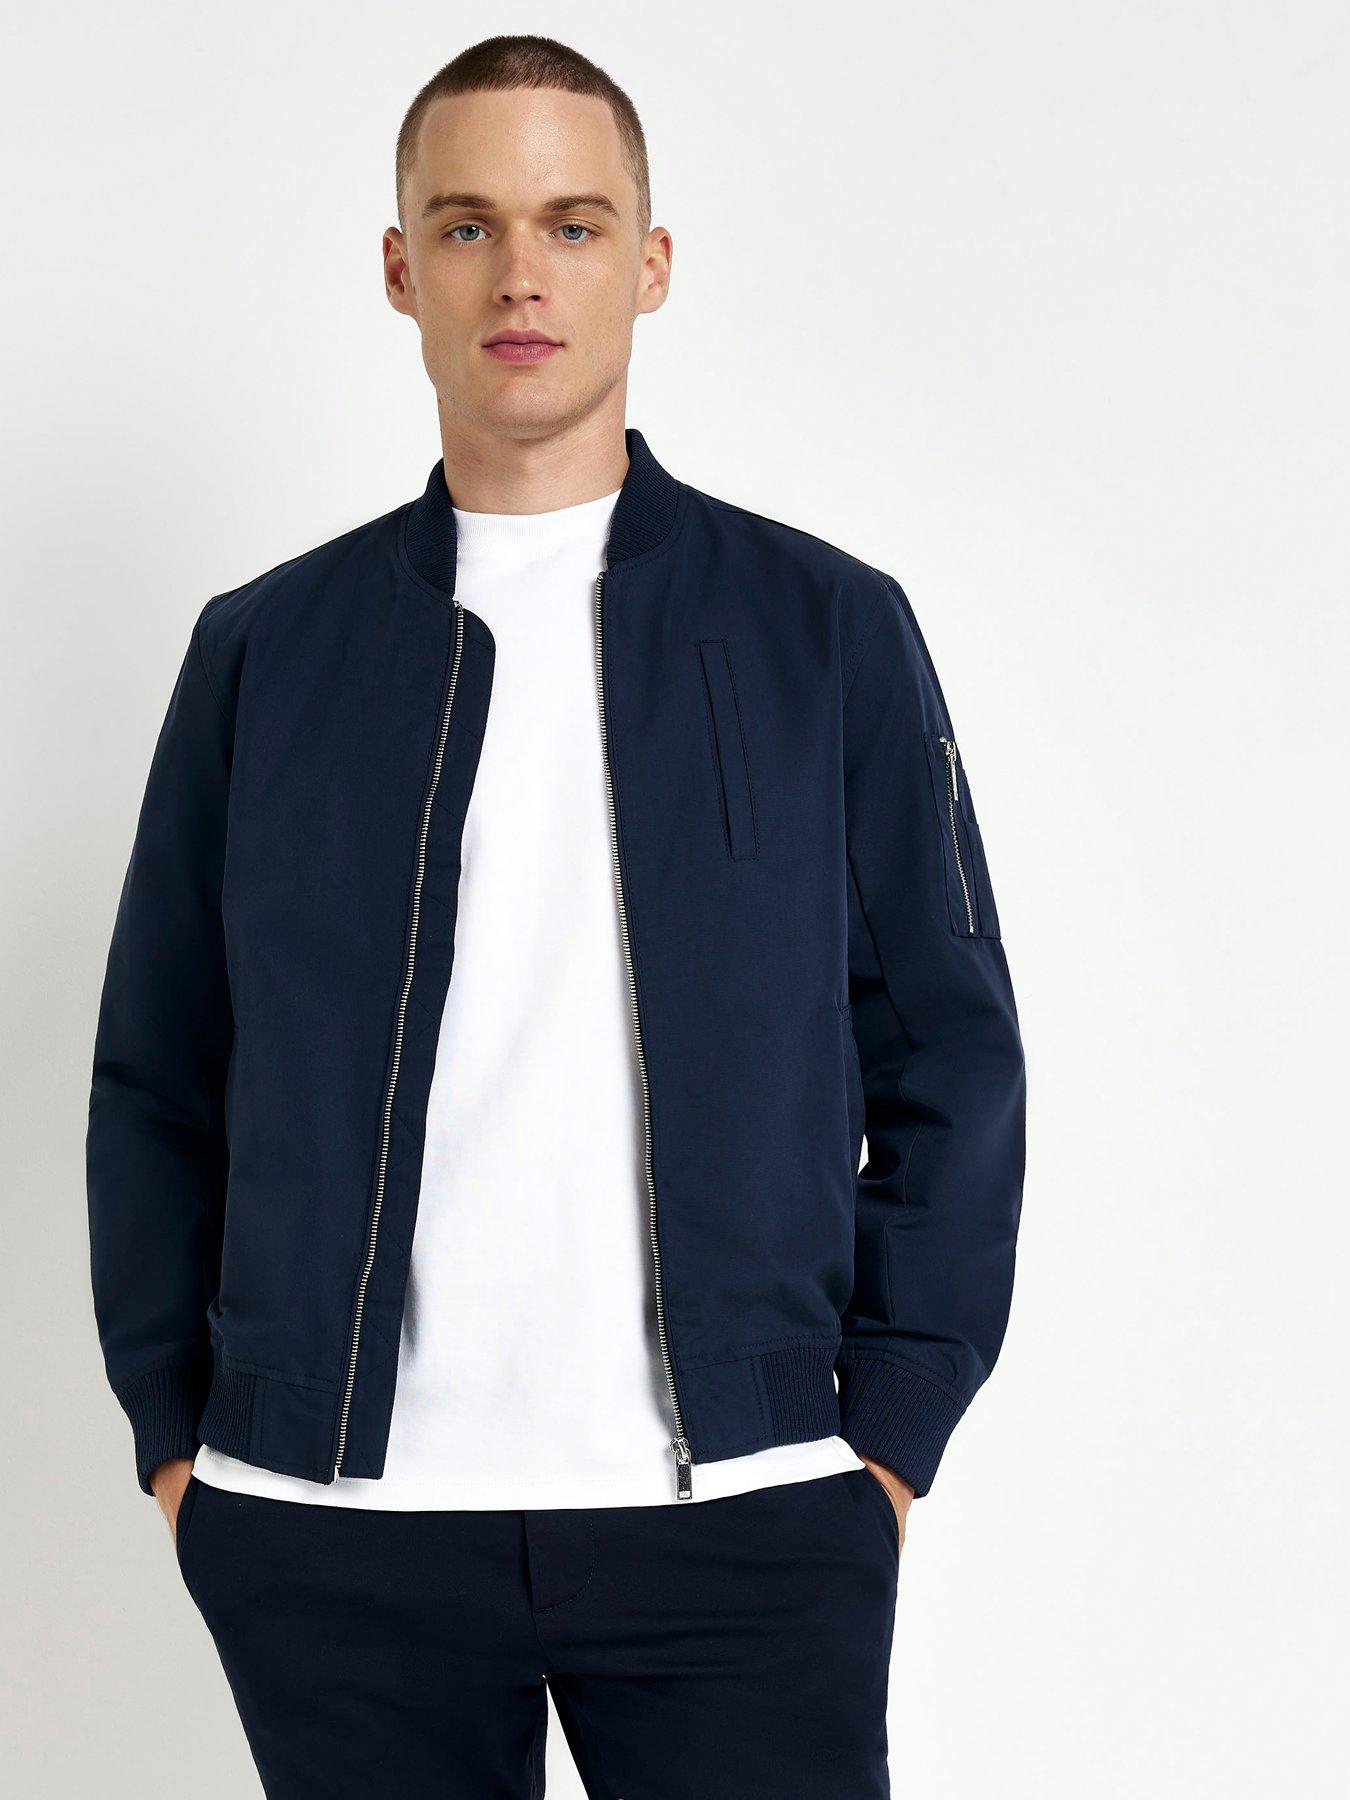 Zara jacket WOMEN FASHION Jackets Bomber discount 89% Black XS 